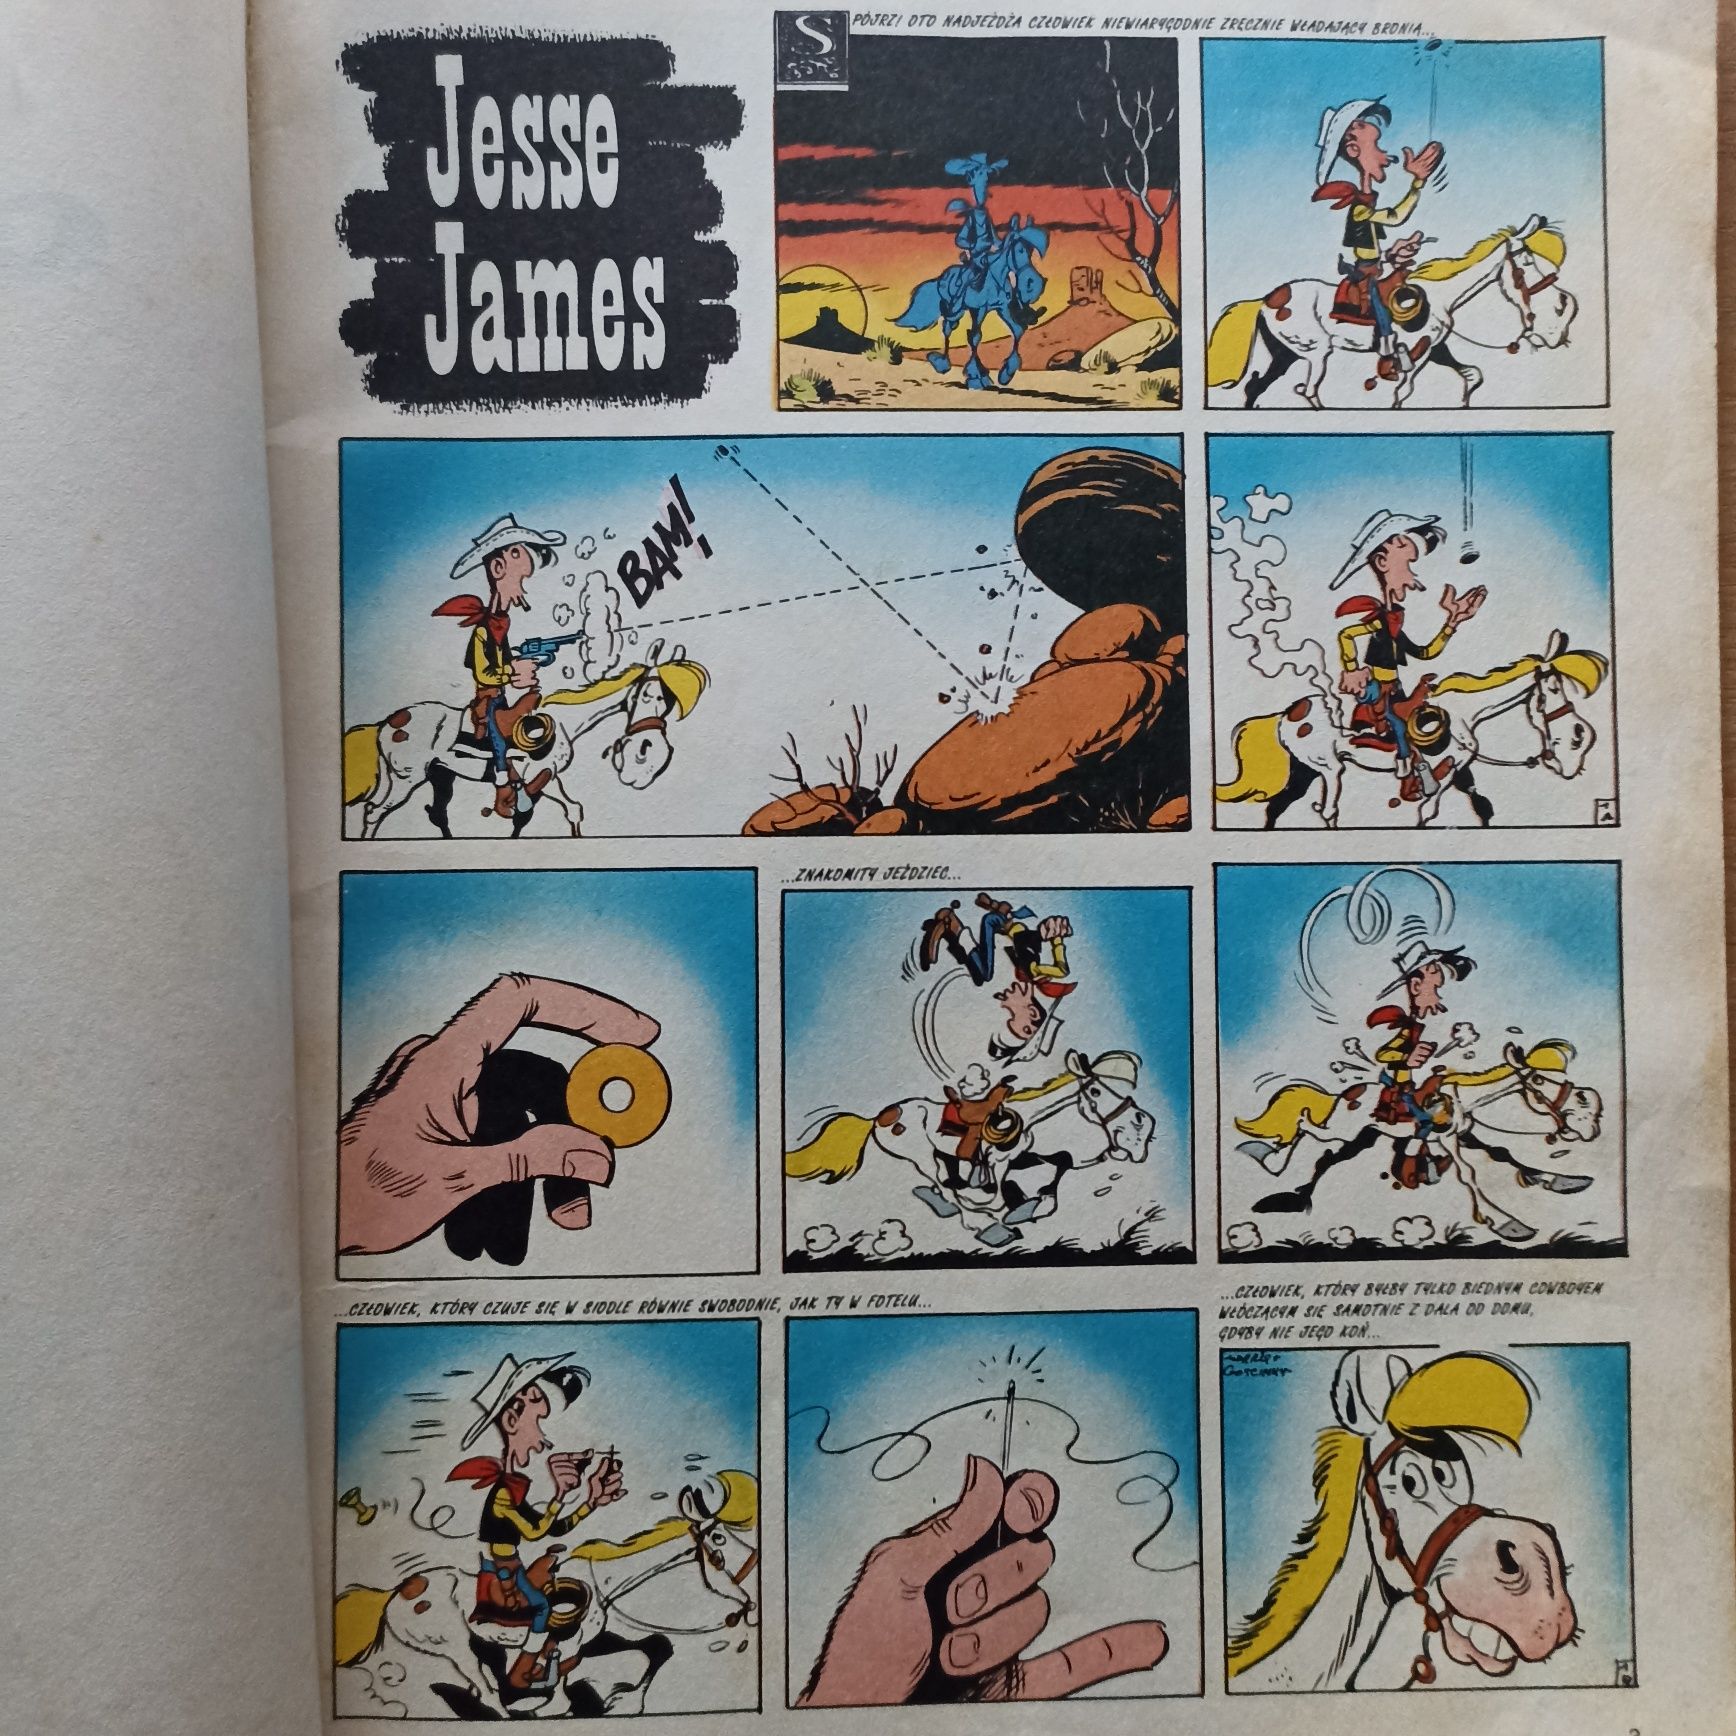 Lucky Luke "Jesse James"